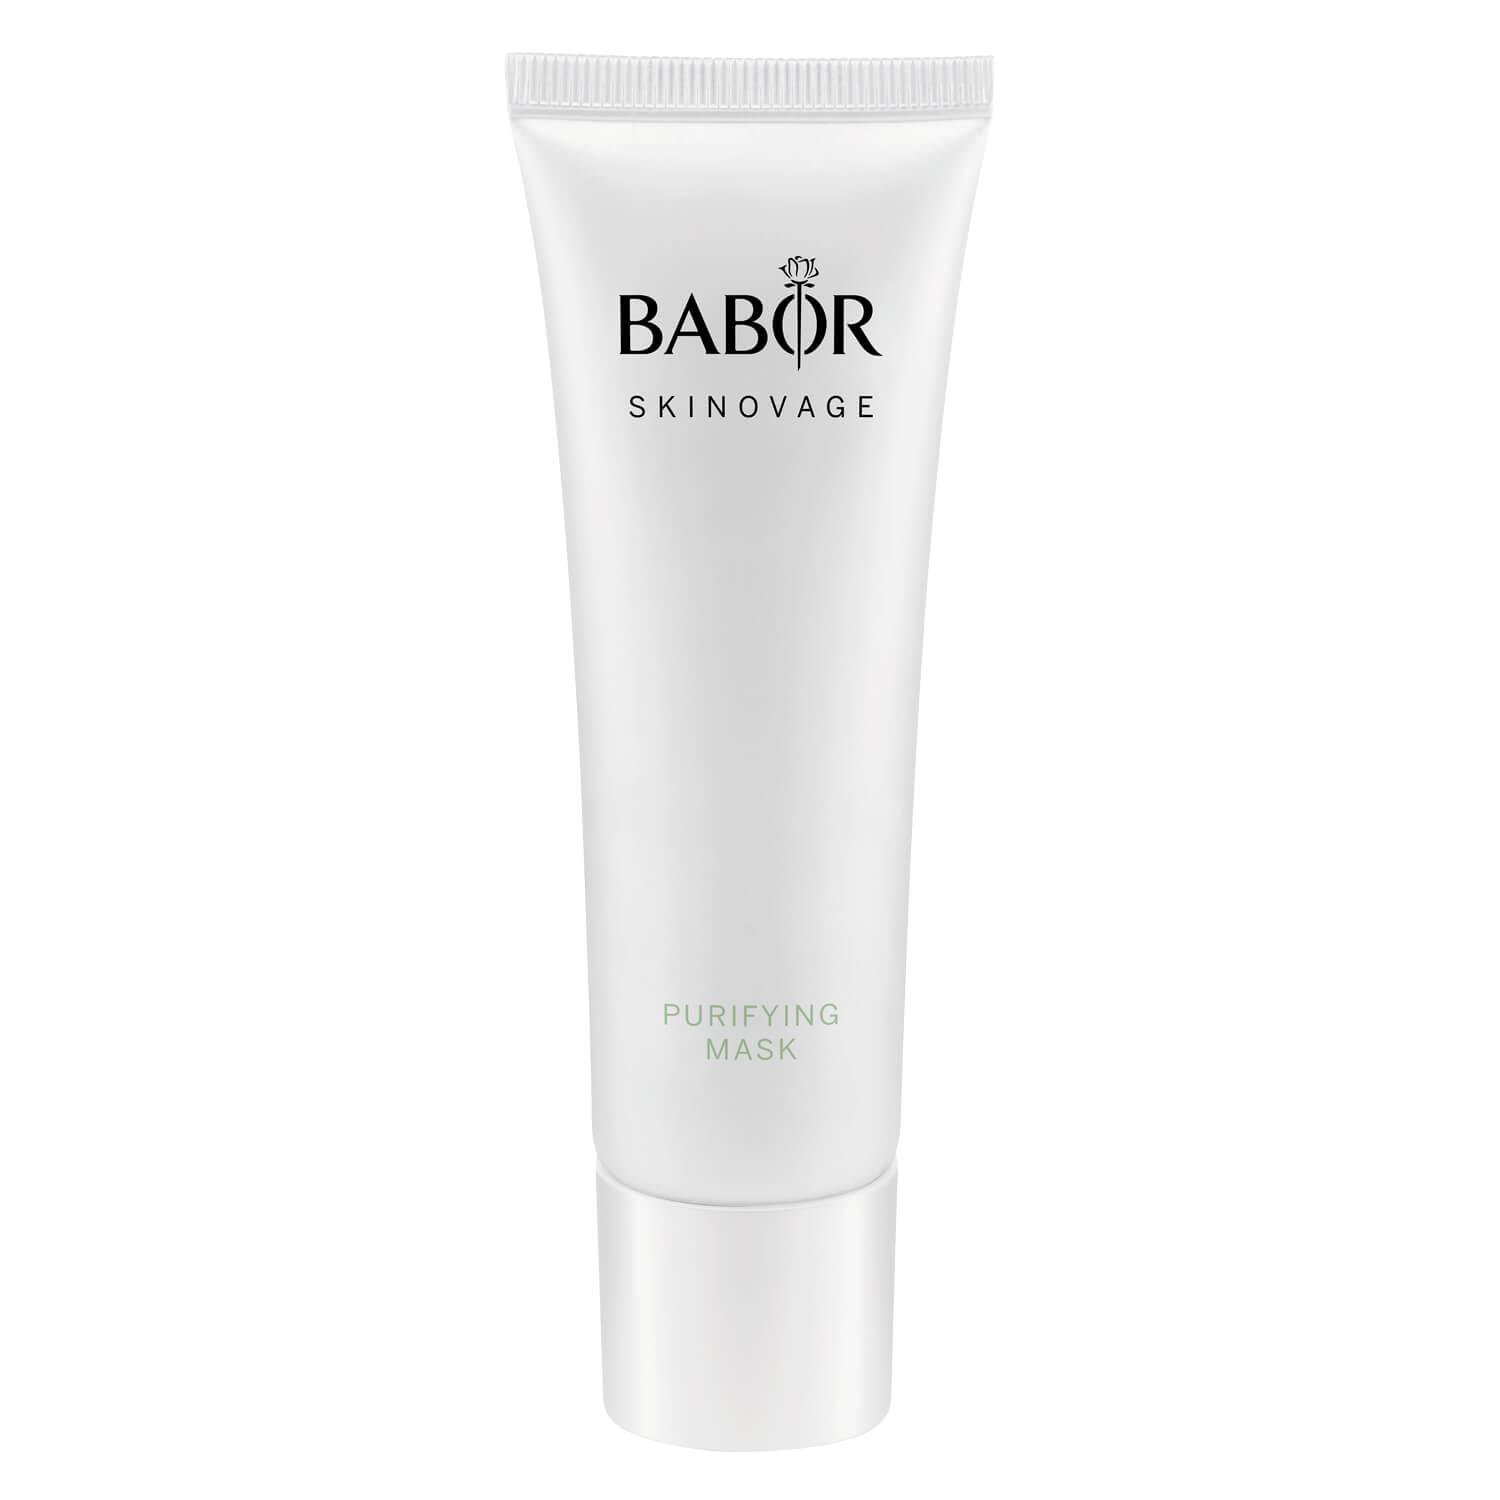 BABOR SKINOVAGE - Purifying Mask Oily Acne-Prone Skin